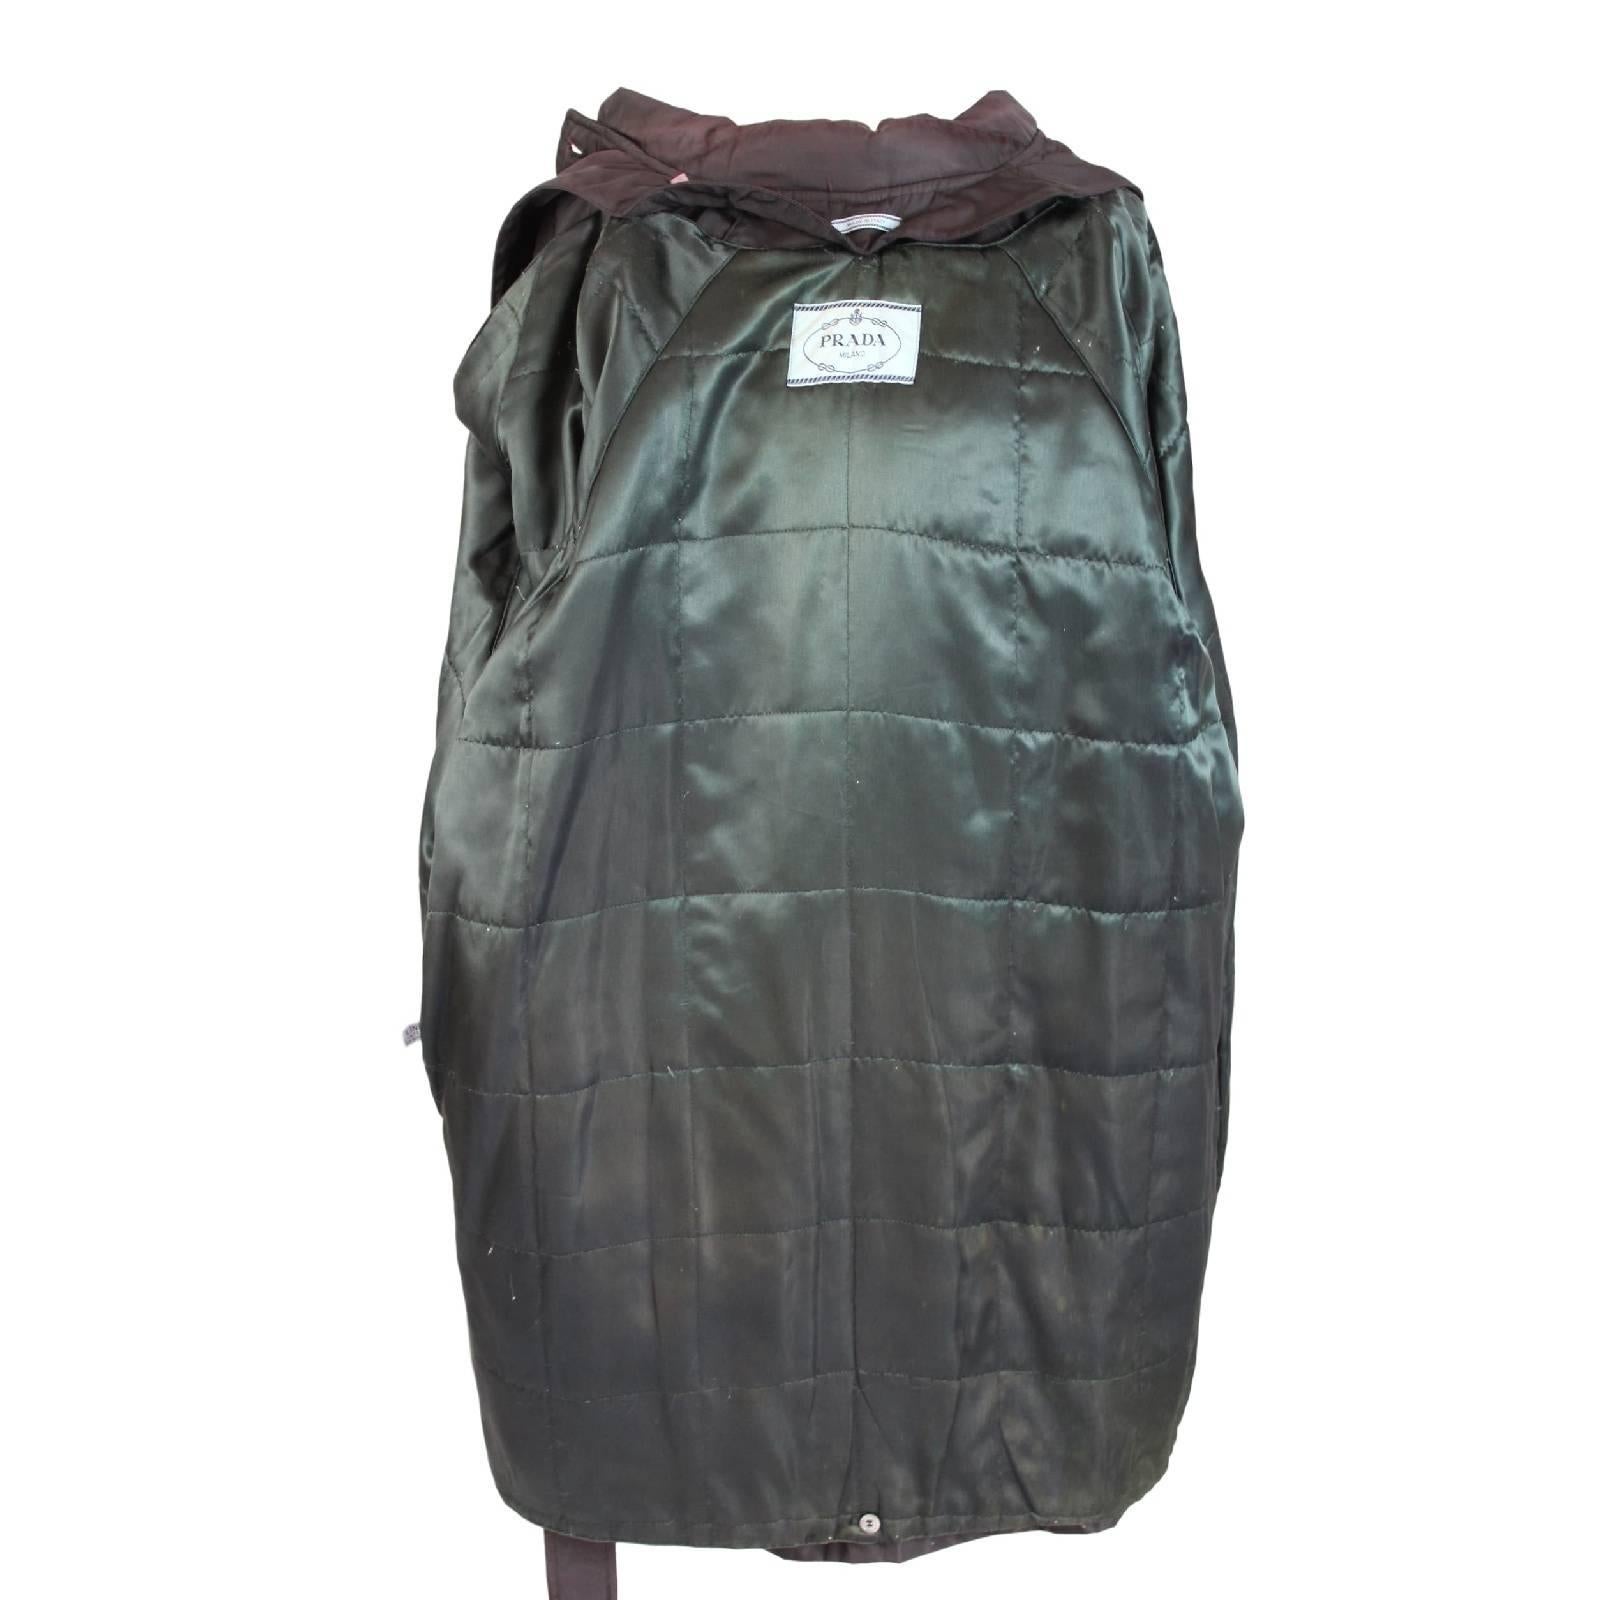 Black 1990s Prada waterproof brown trench coat raincoat size S women’s  For Sale